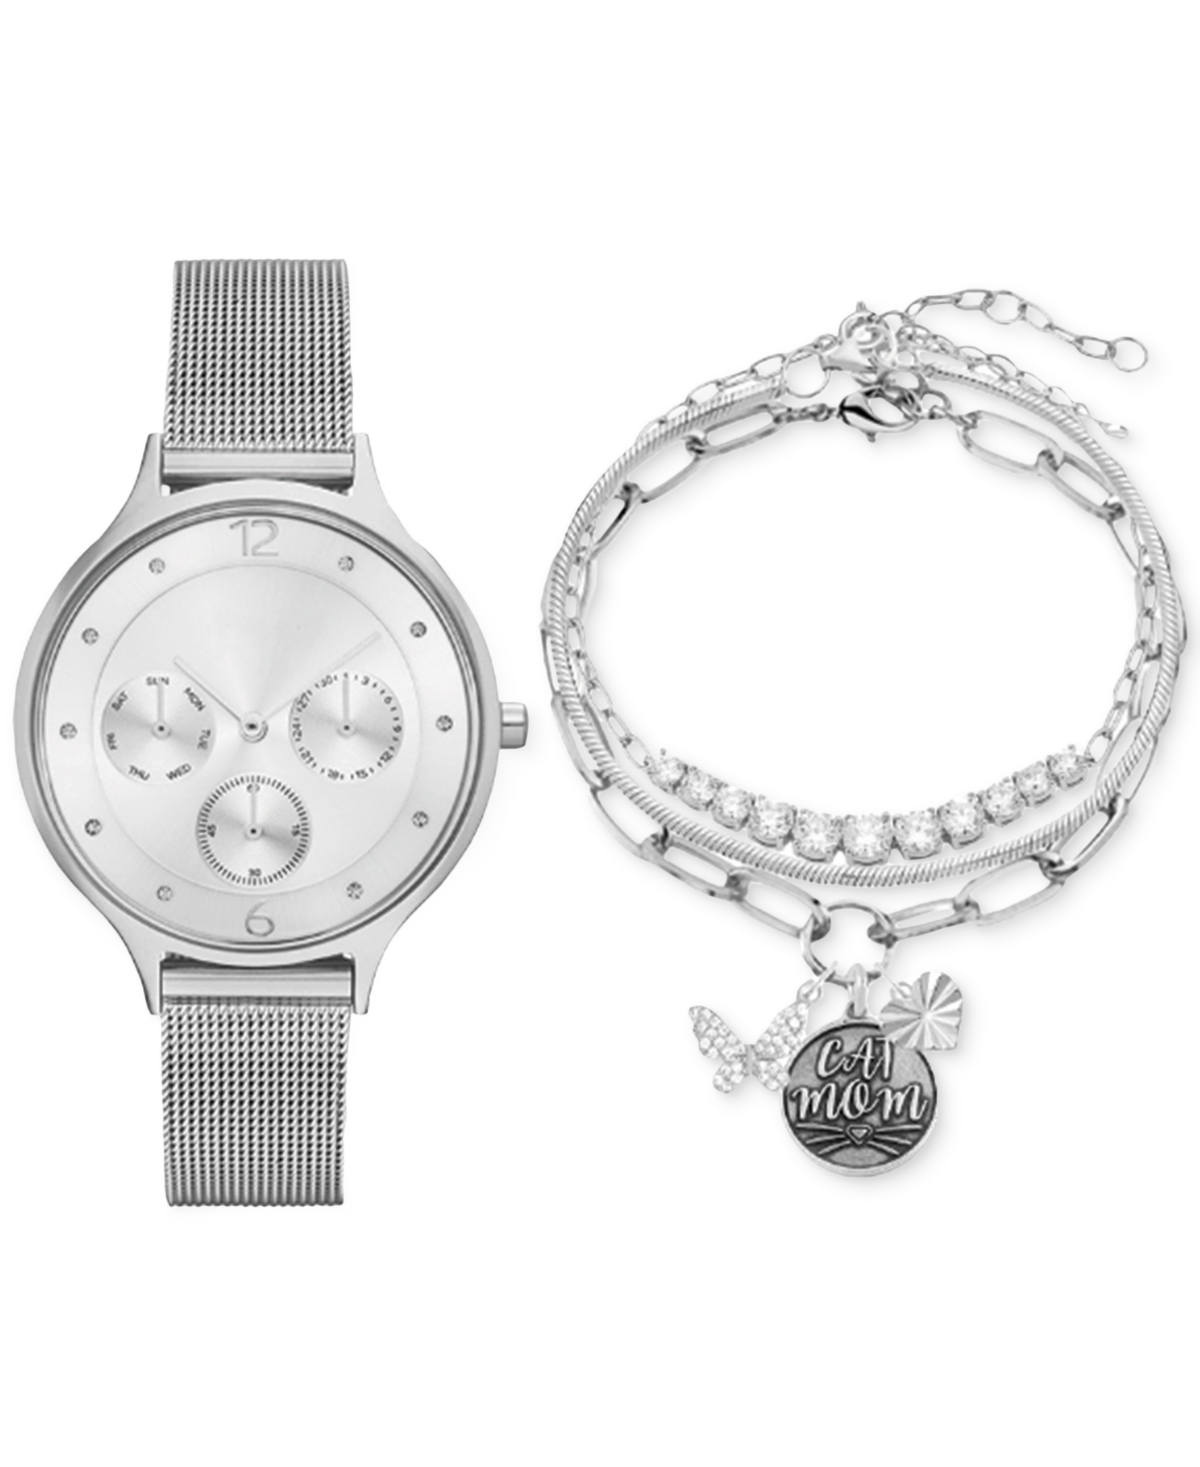 Women's Silver-Tone Mesh Metal Alloy Bracelet Watch 36mm Gift Set - Shiny Silver